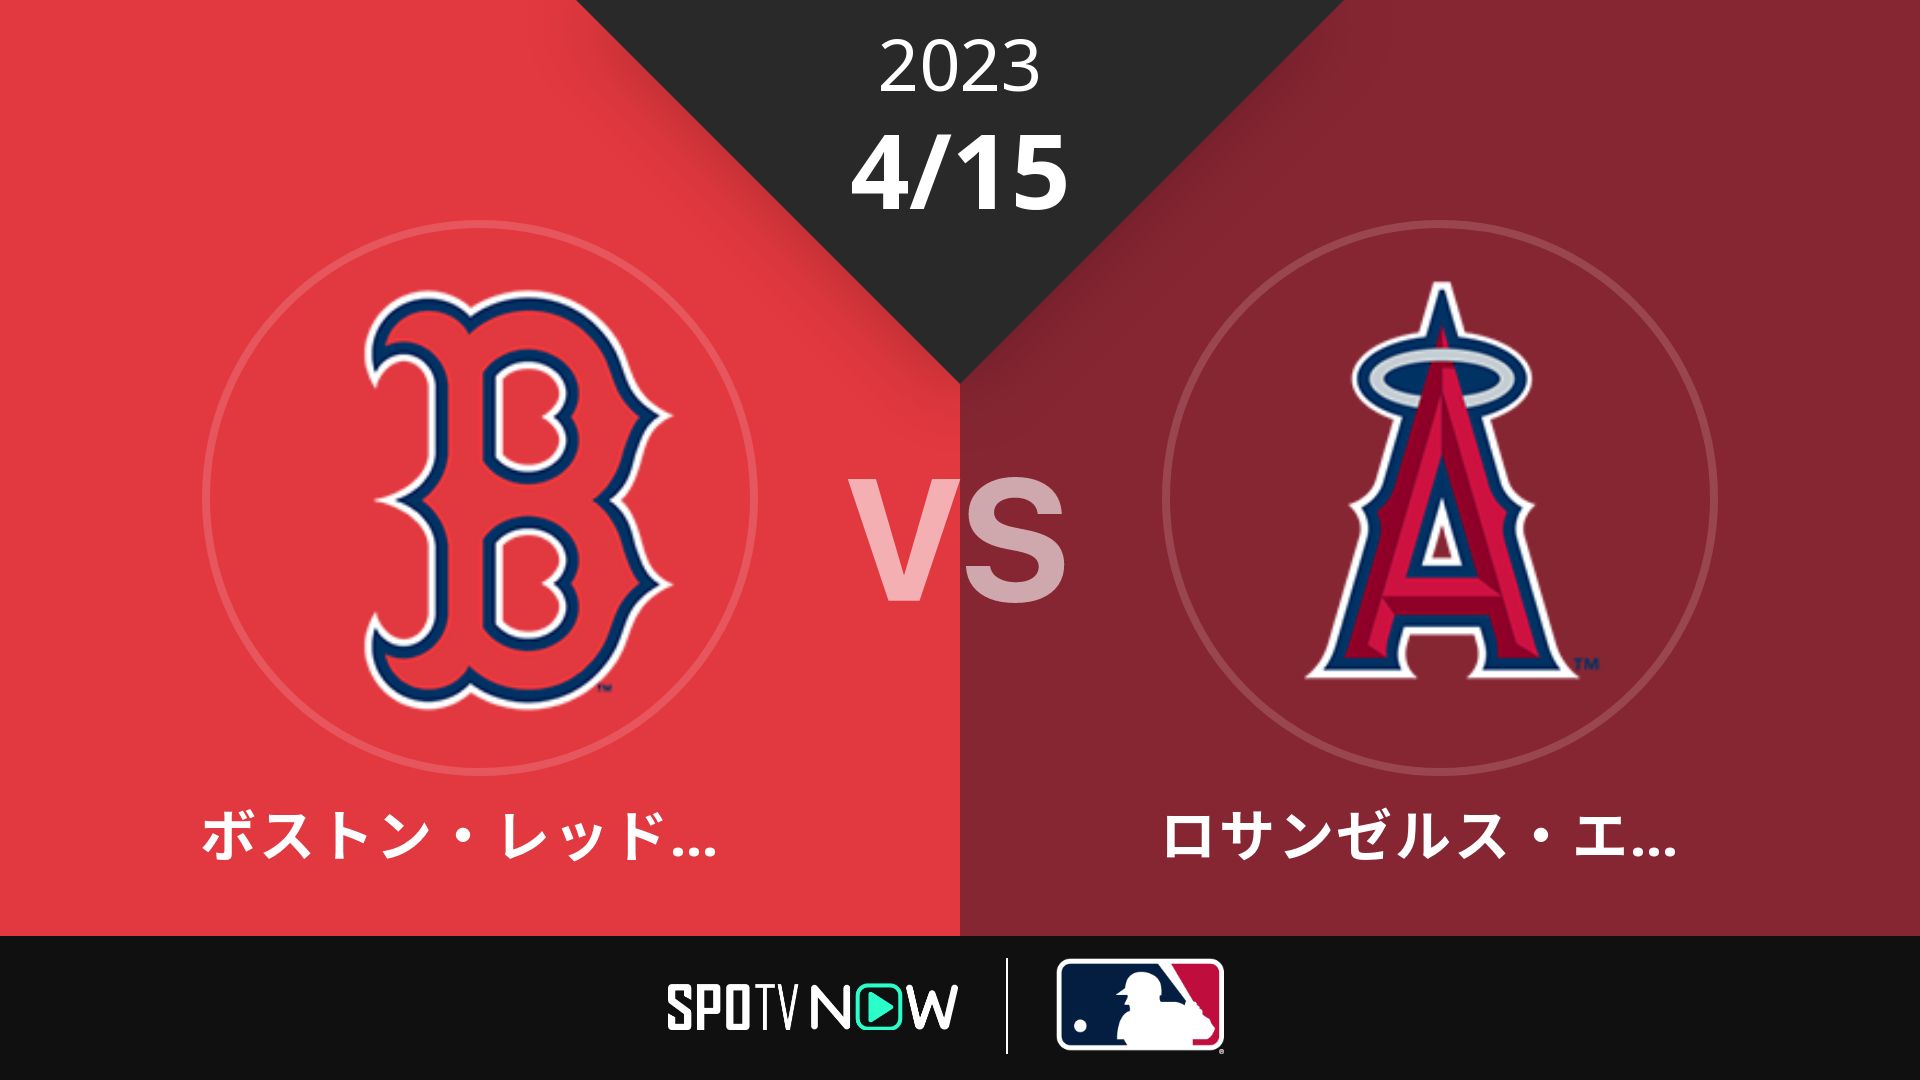 2023/4/15 Rソックス vs エンゼルス [MLB]